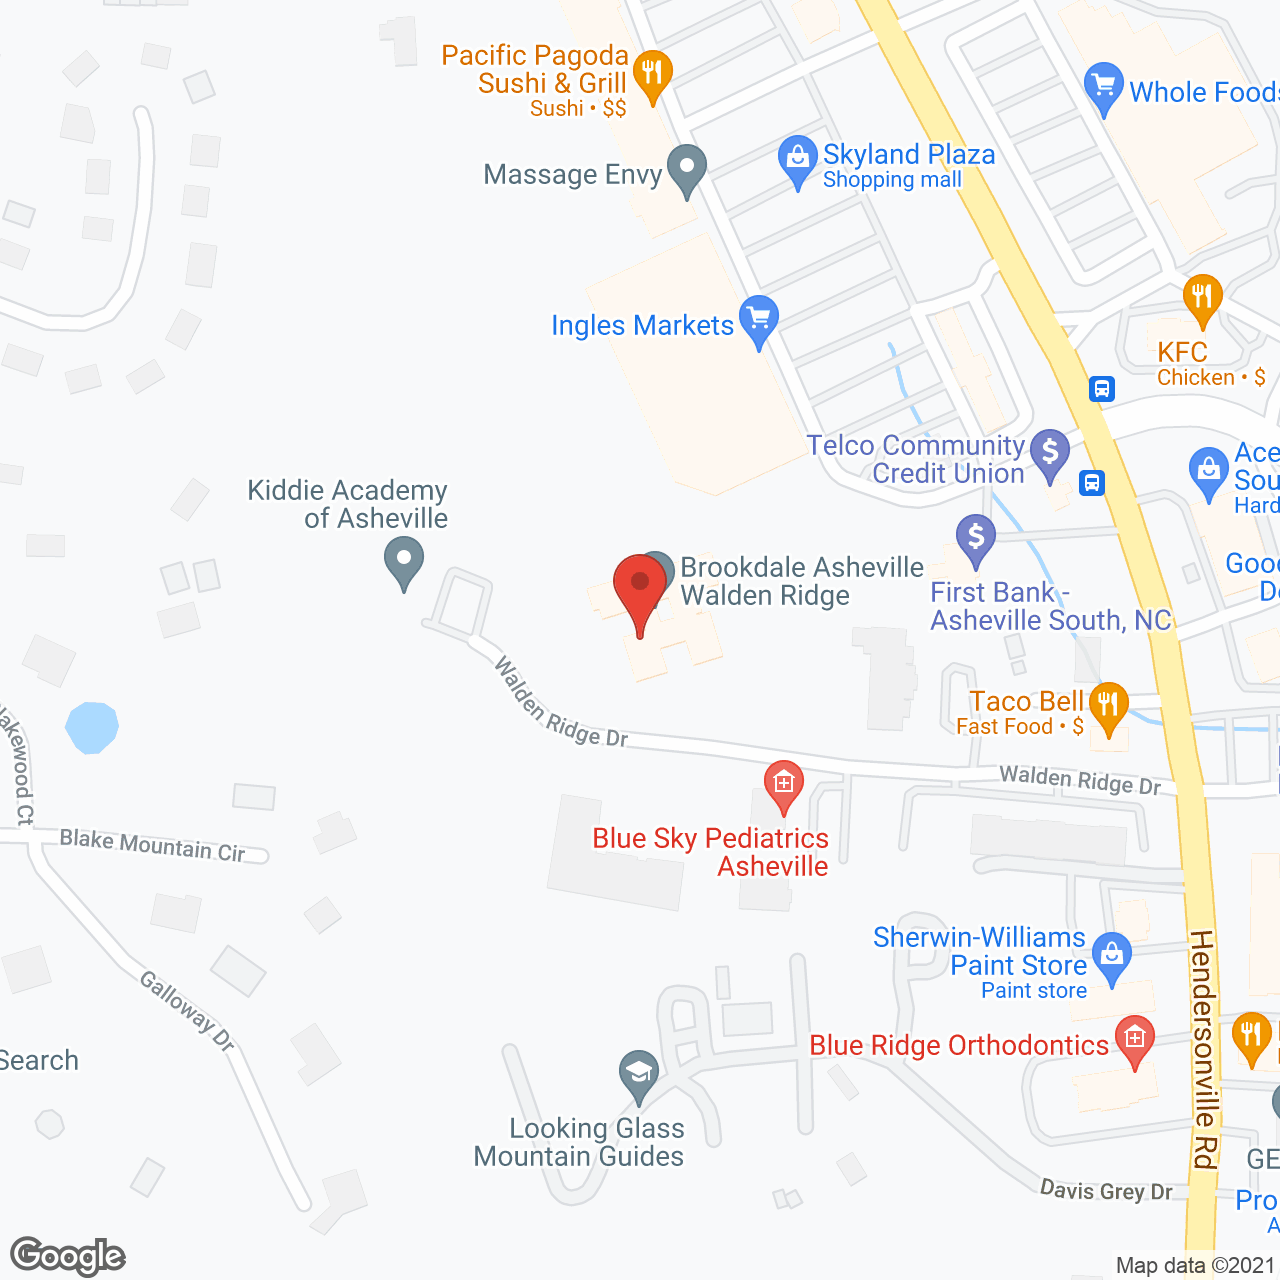 Brookdale Asheville Walden Ridge in google map